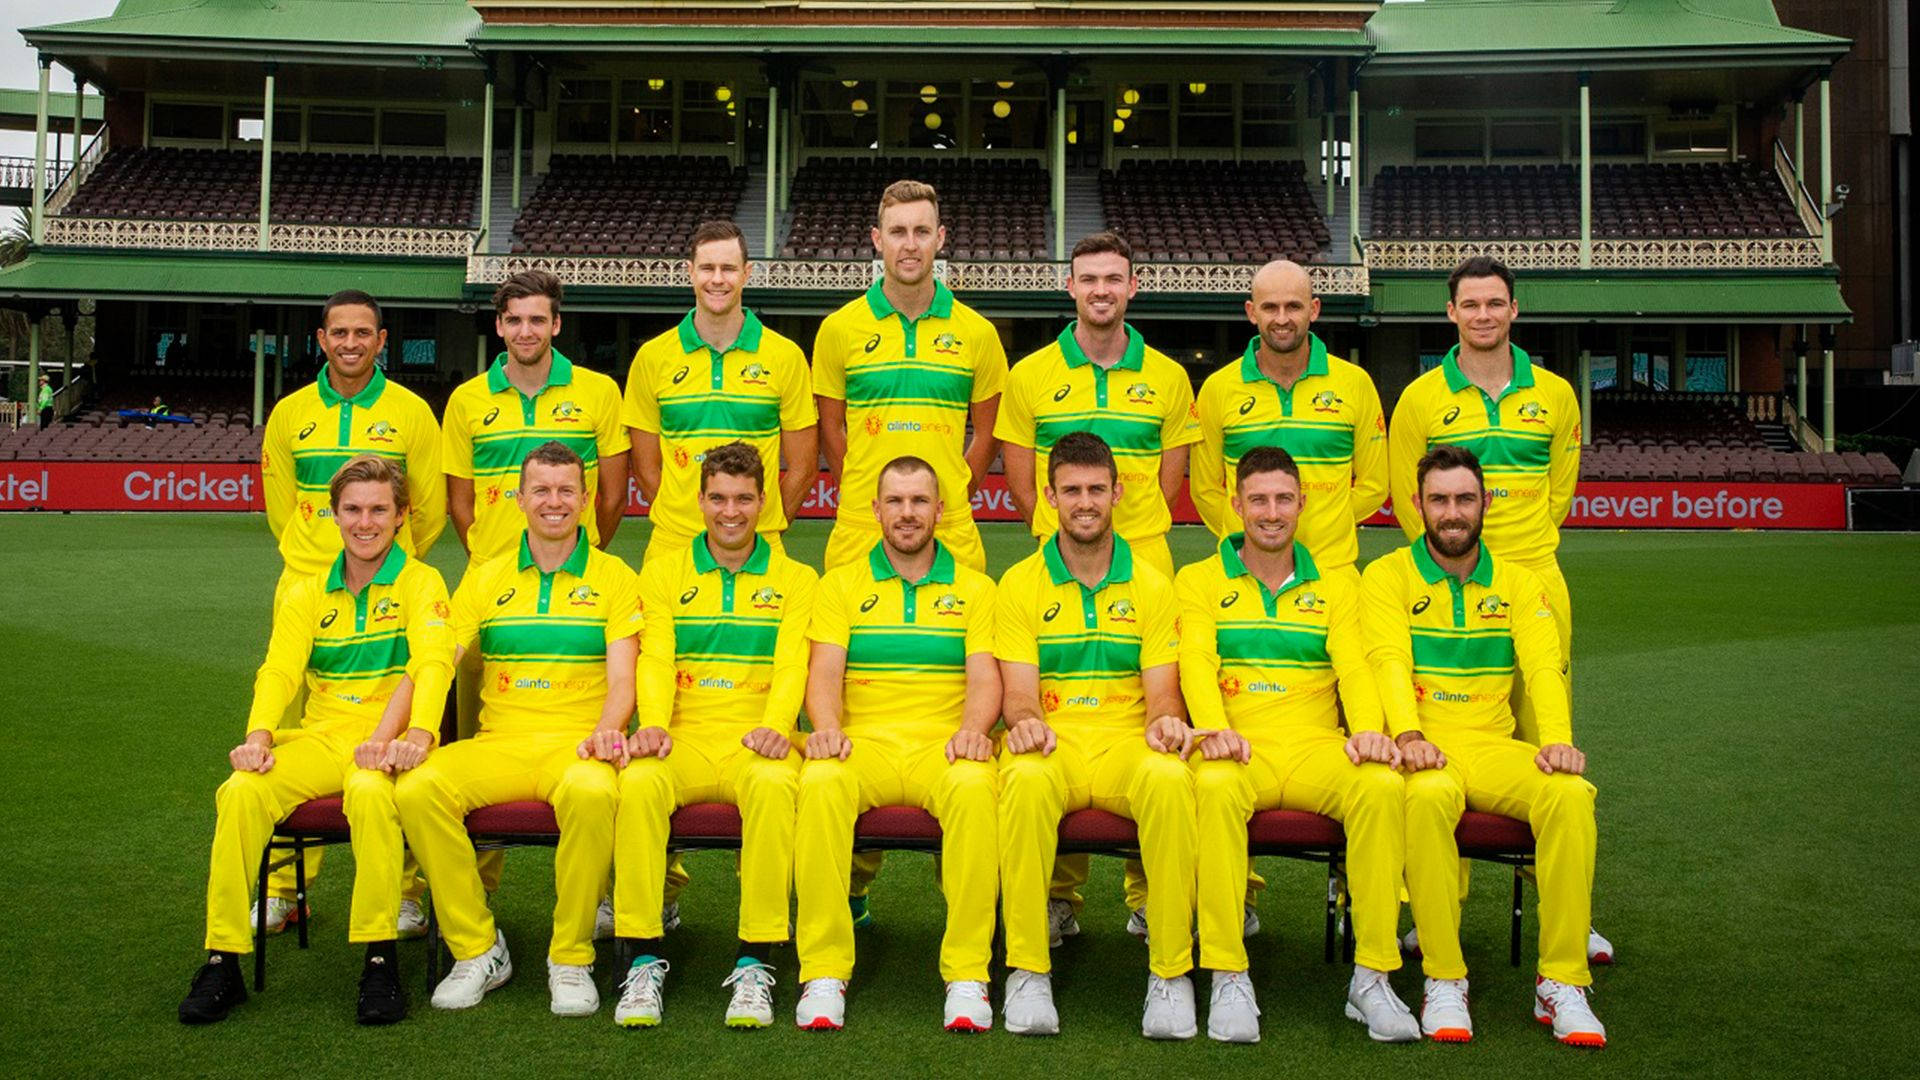 Australia Cricket Team Photograph In Field